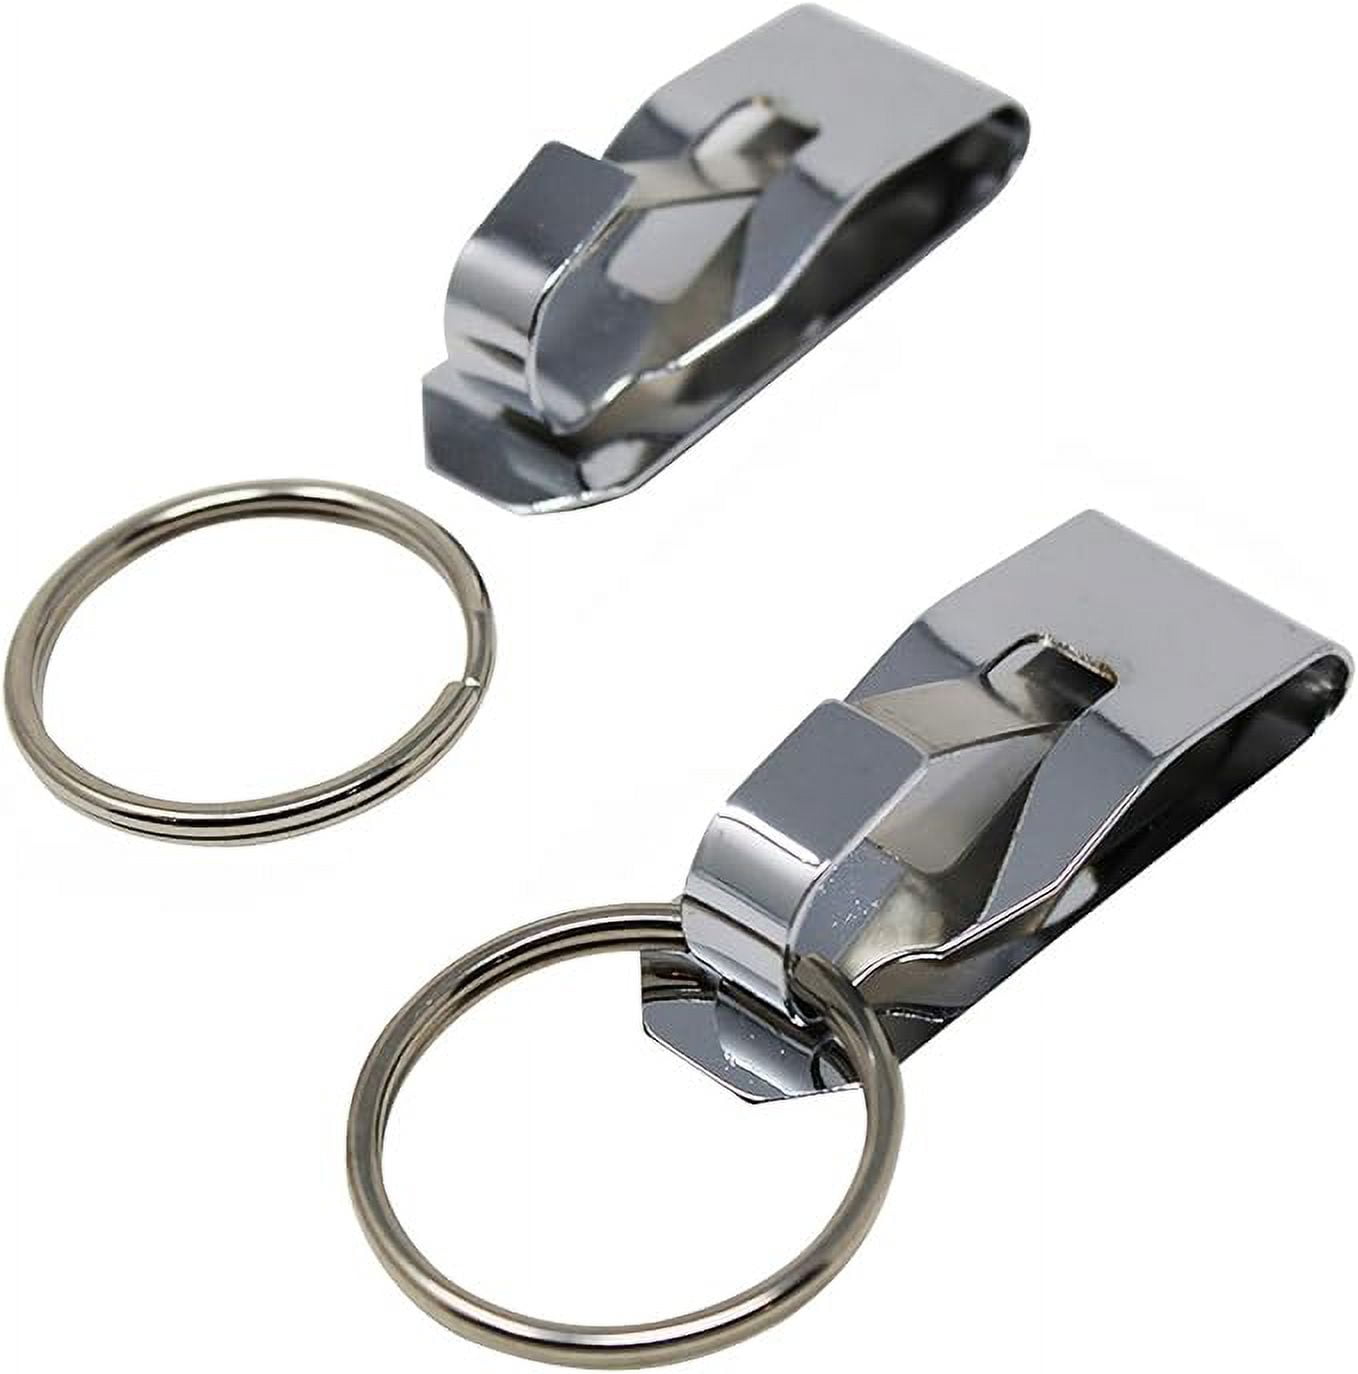 Key-Bak Super48 SD 13oz. Locking Retractable Keychain, 36 Retractable Cord, Black Polycarbonate Case, Steel Belt Clip, Oversized Split Ring